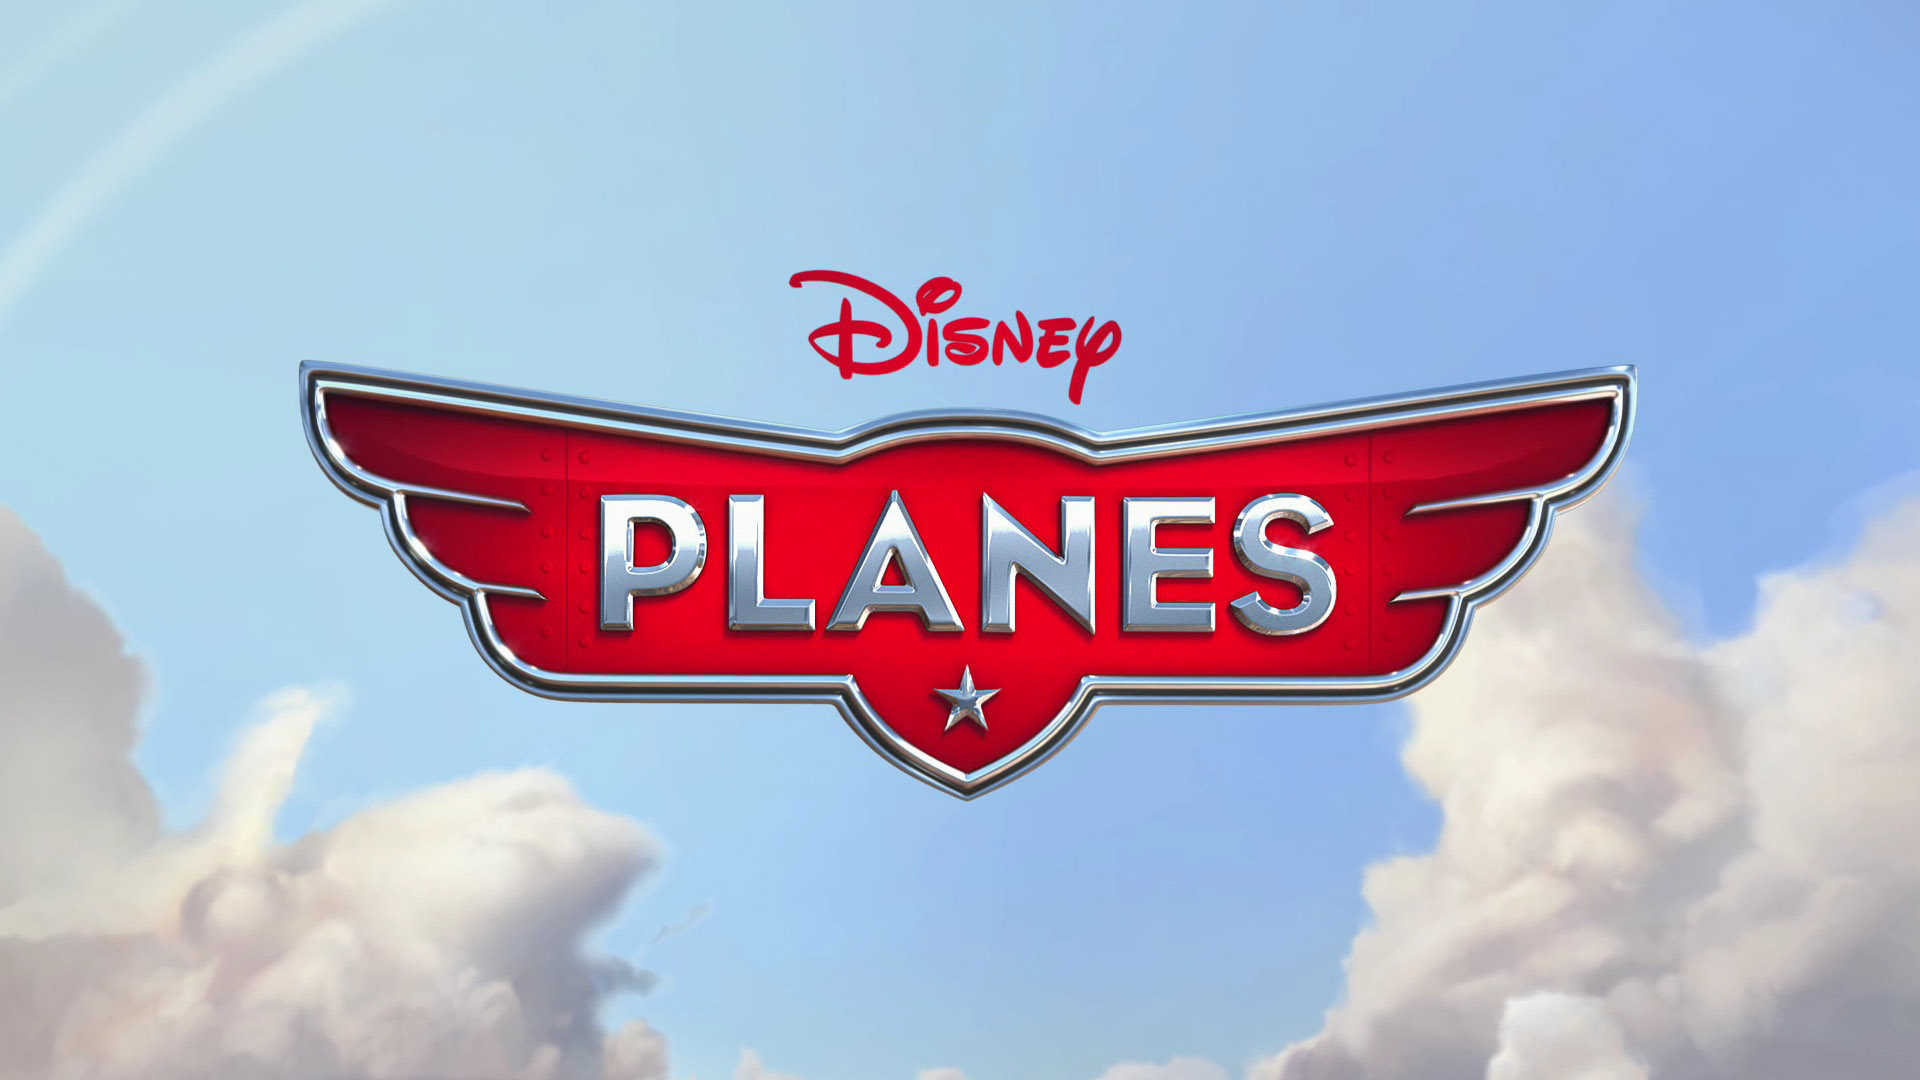 Disney Planes Movie Logo Wallpaper